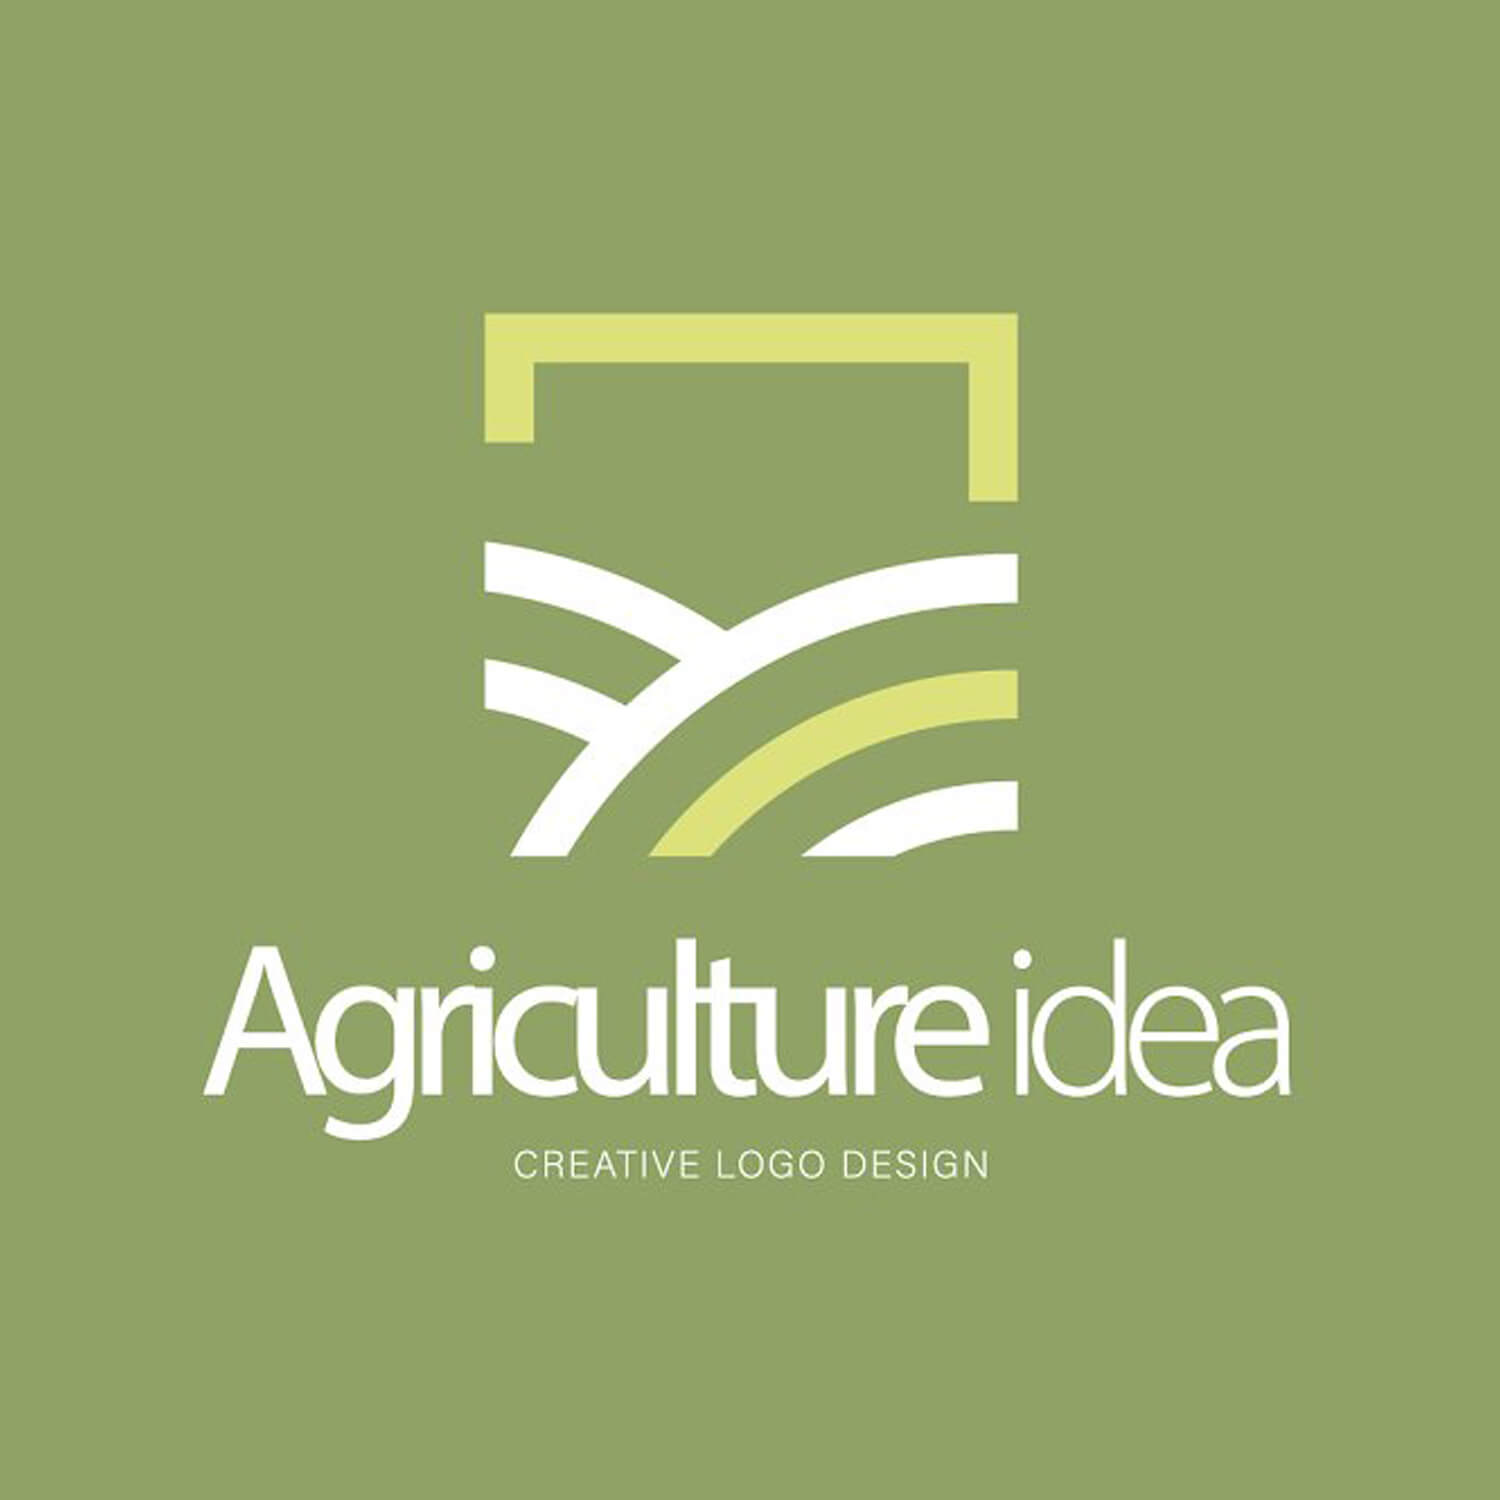 Logo agriculture idea closeup on a green background.